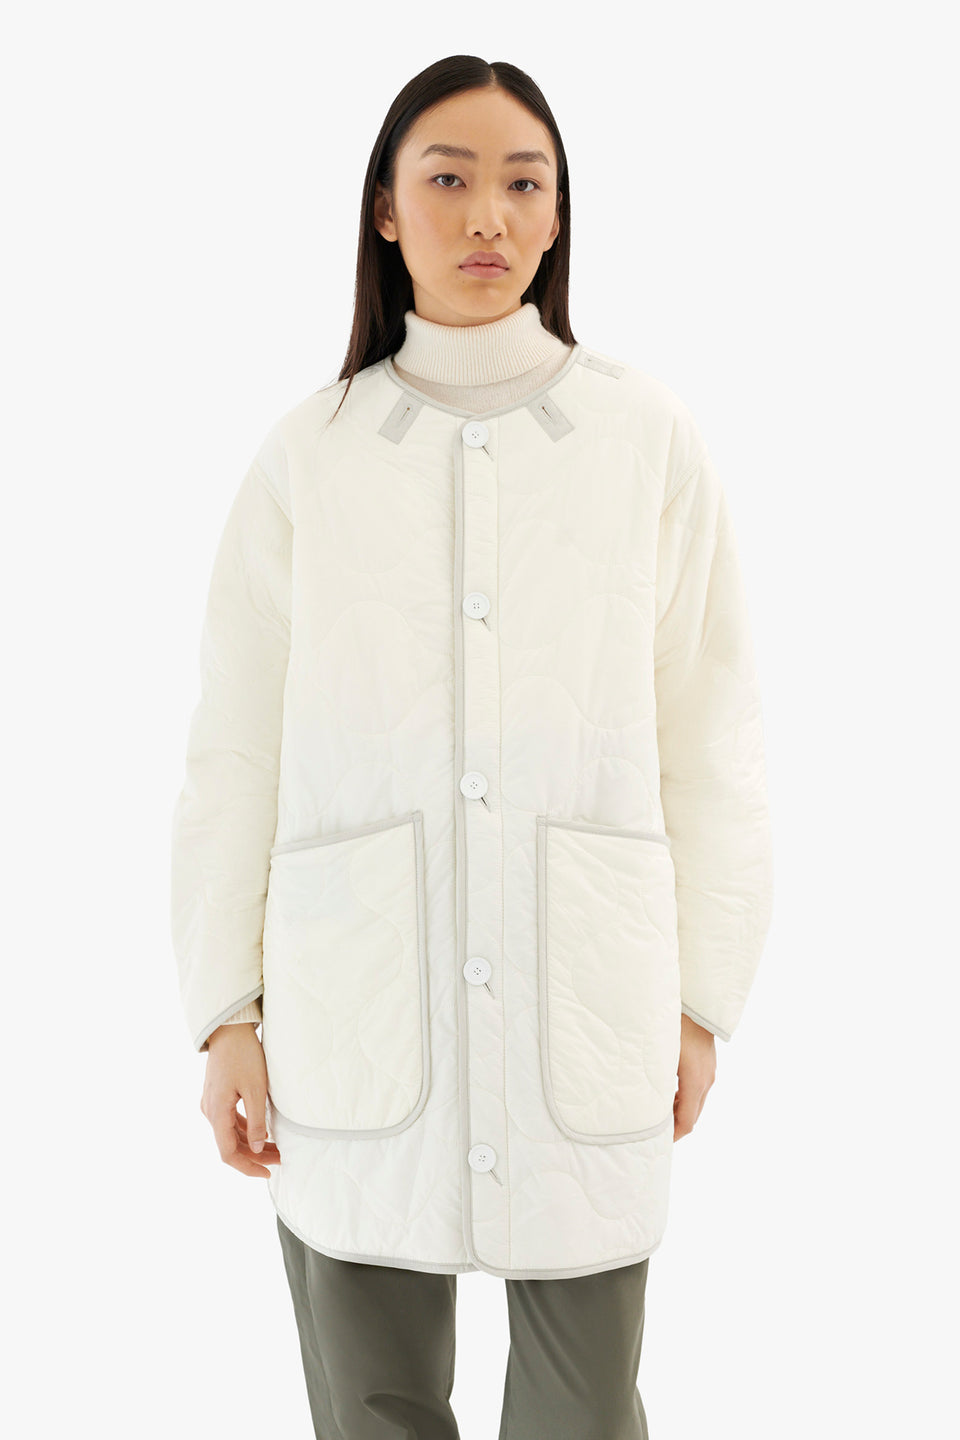 Alpaca Quilt Jacket - Natural / White (listing page thumbnail)